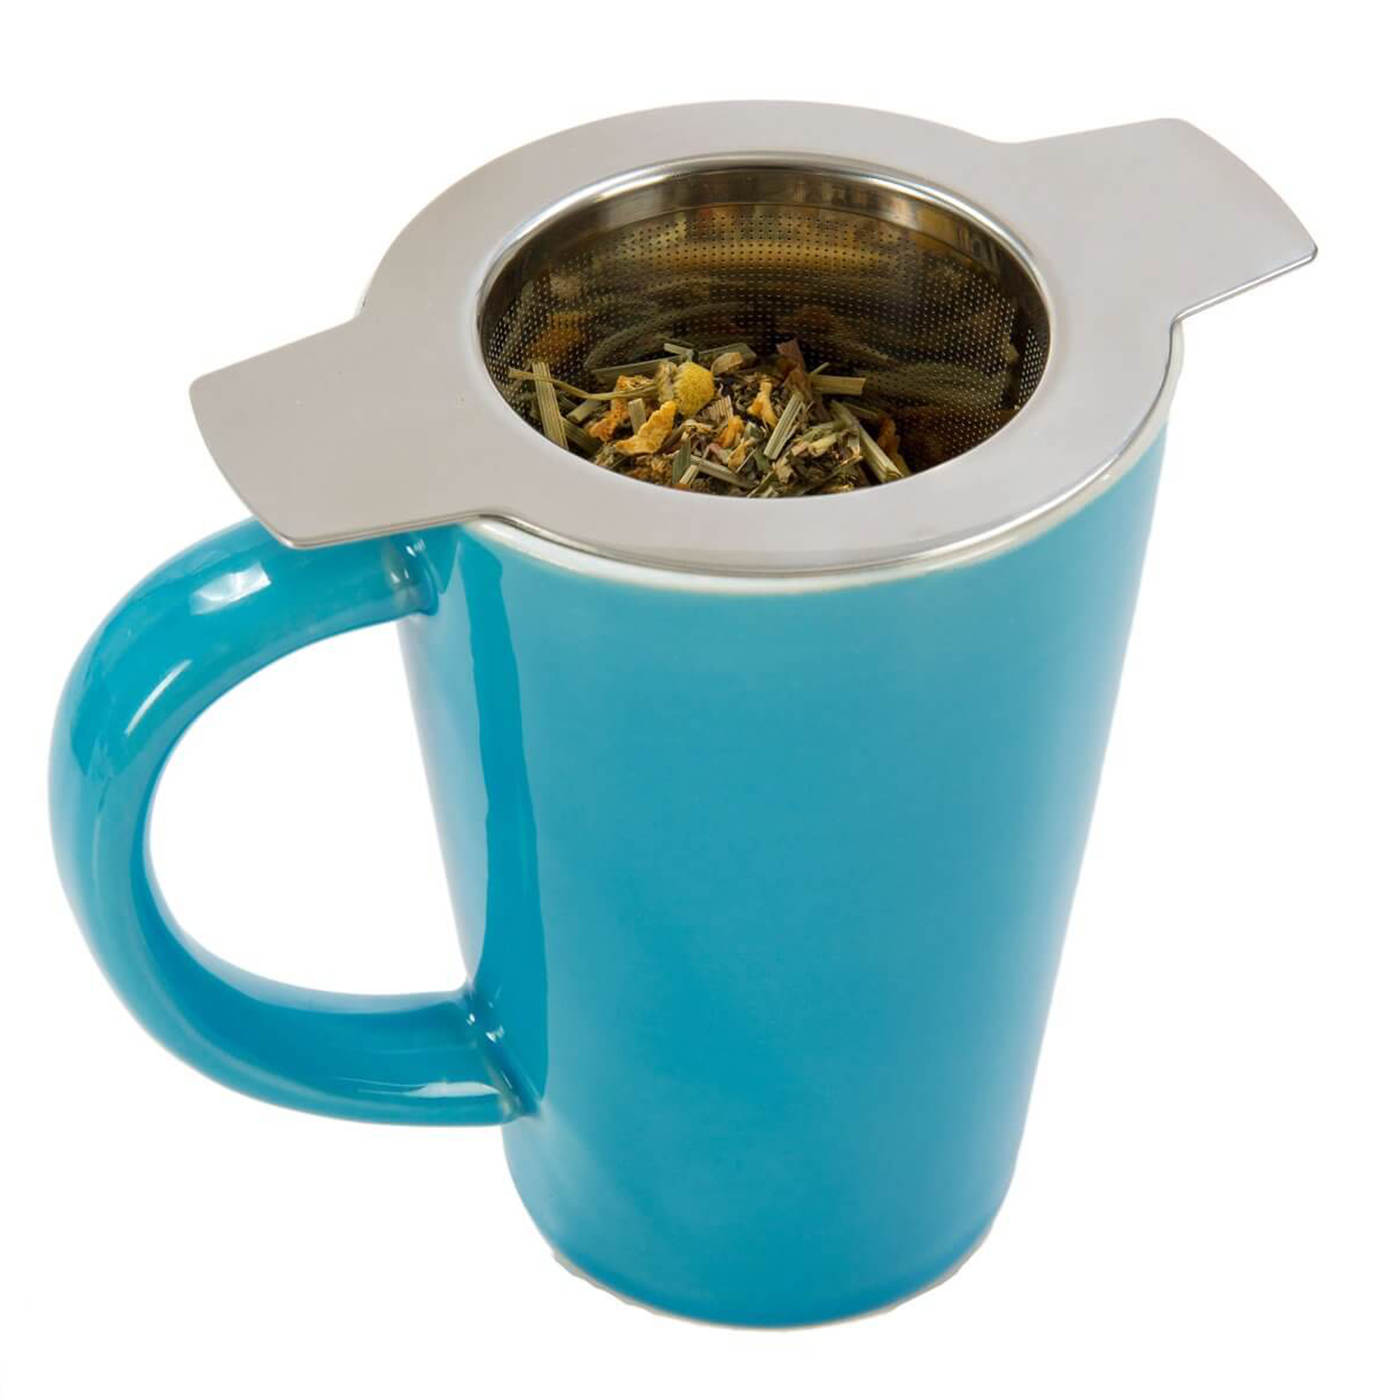 Ceramic Travel Mug with Stainless Steel Tea Infuser